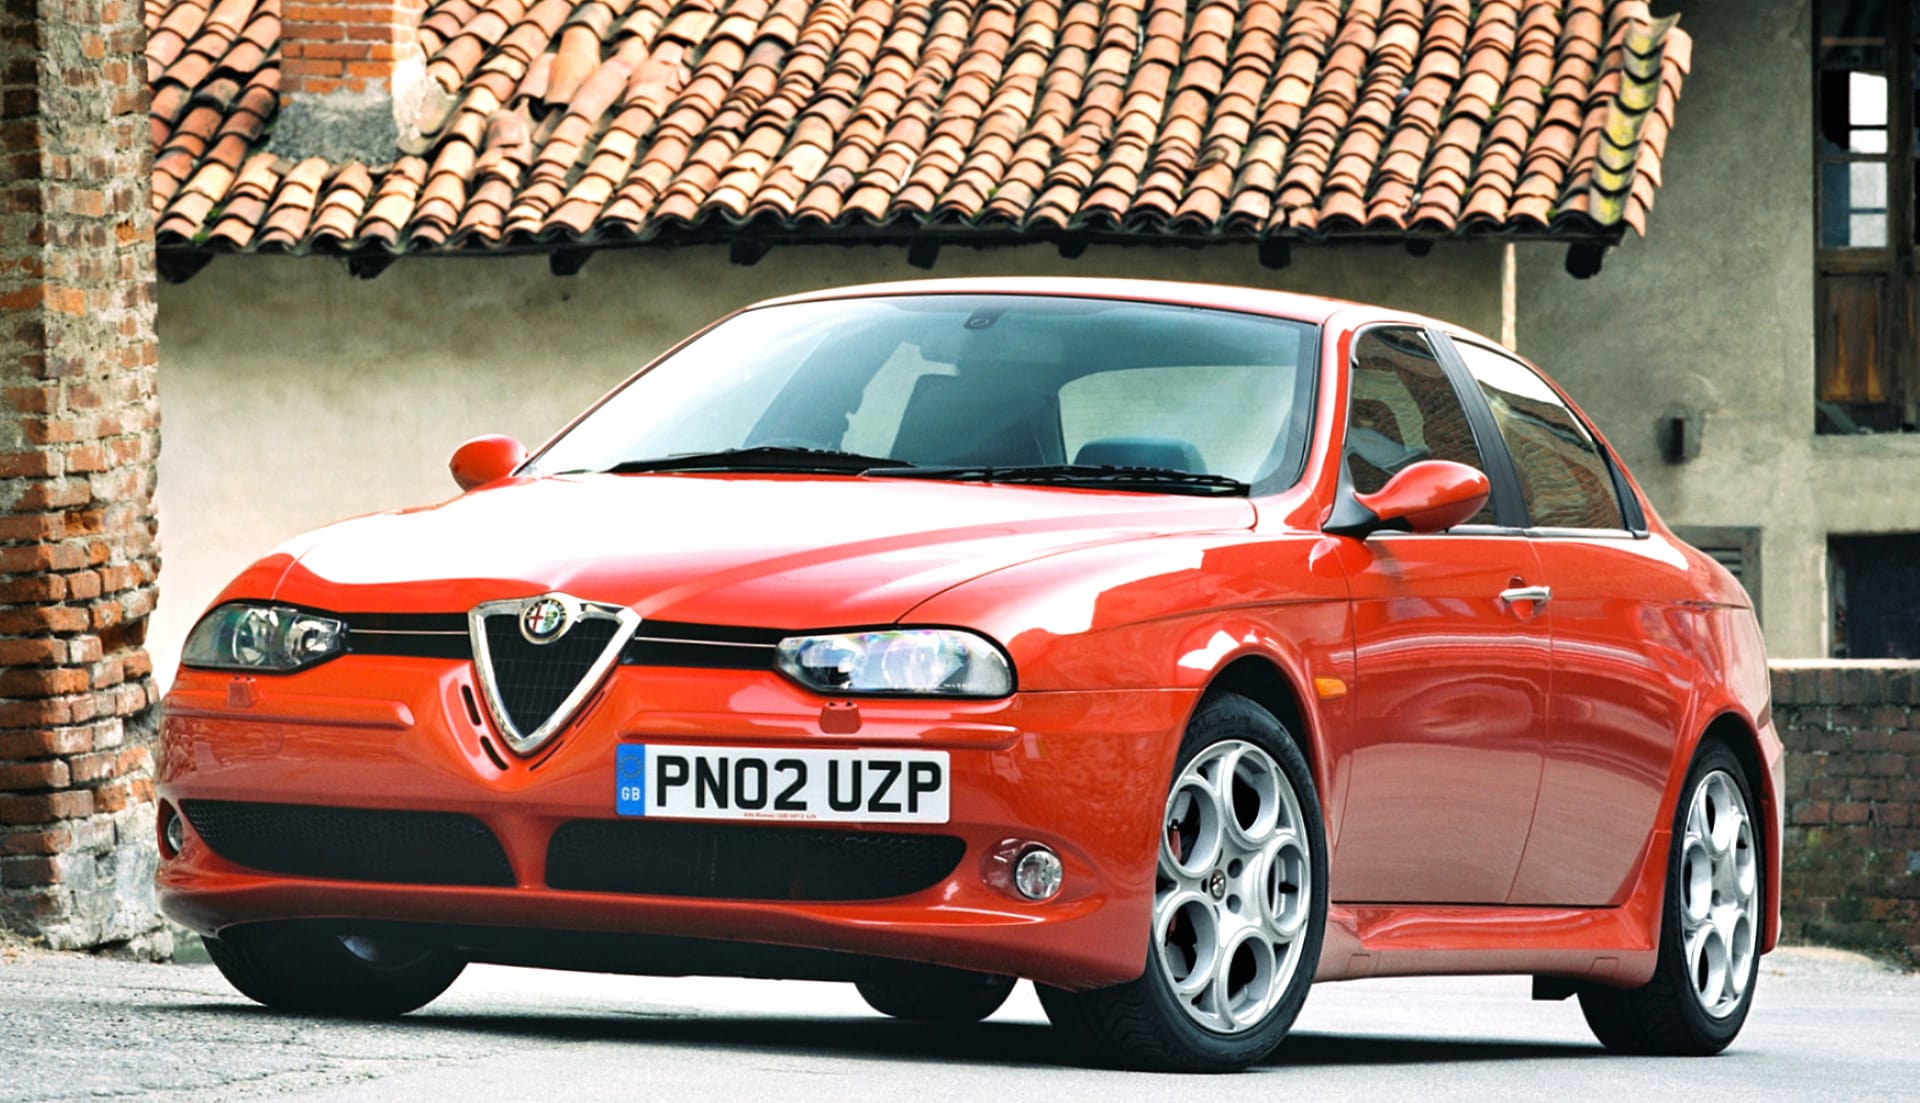 Alfa Romeo 156 GTA at 2048 x 2048 iPad size wallpapers HD quality